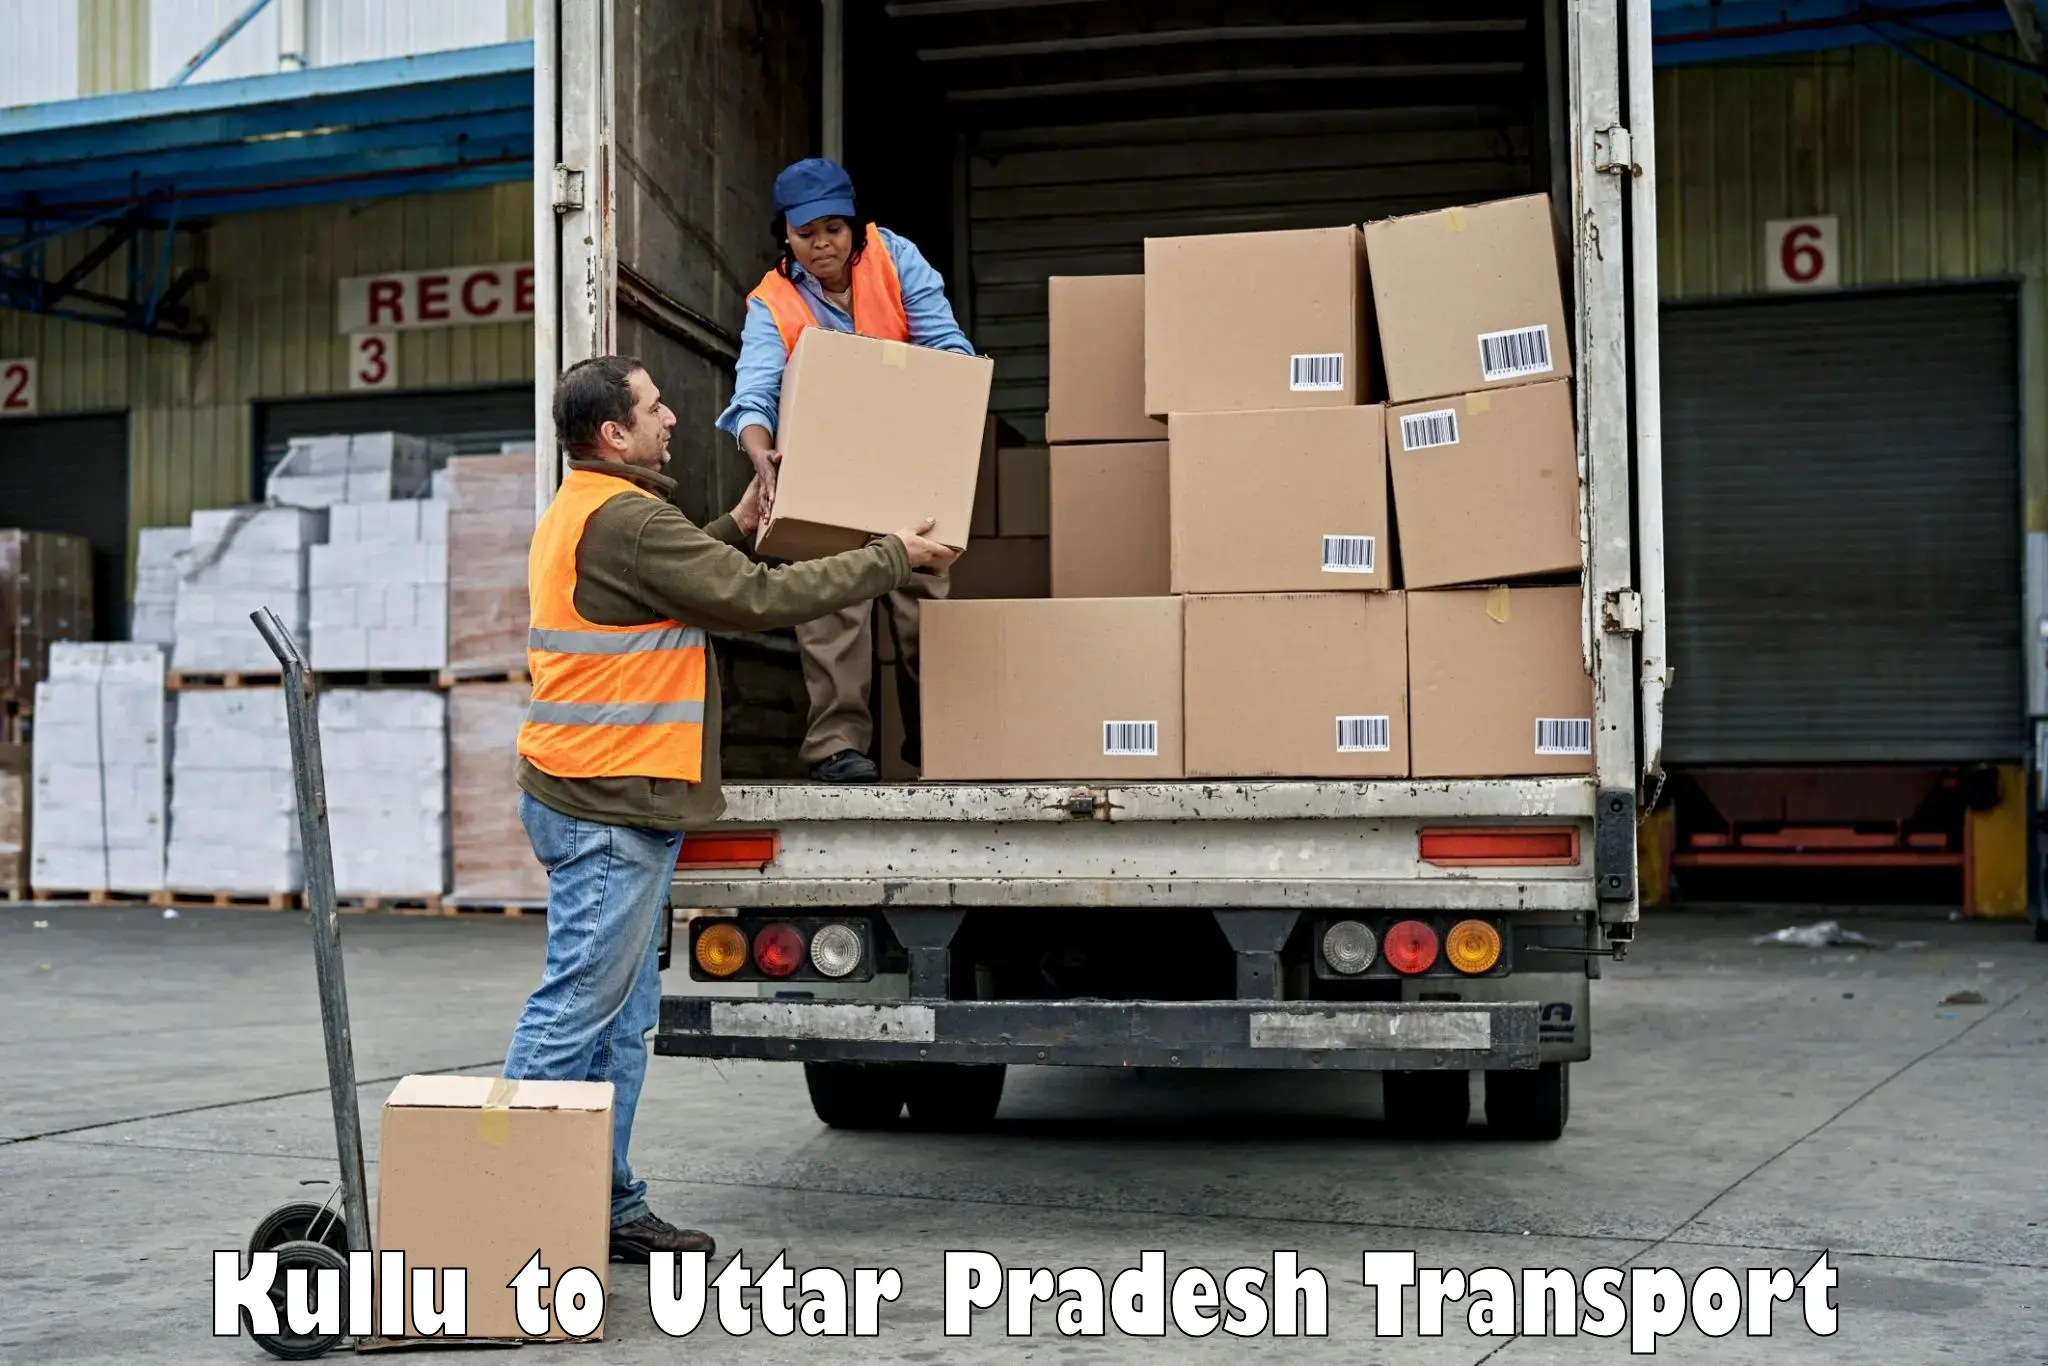 Truck transport companies in India Kullu to Naugarh